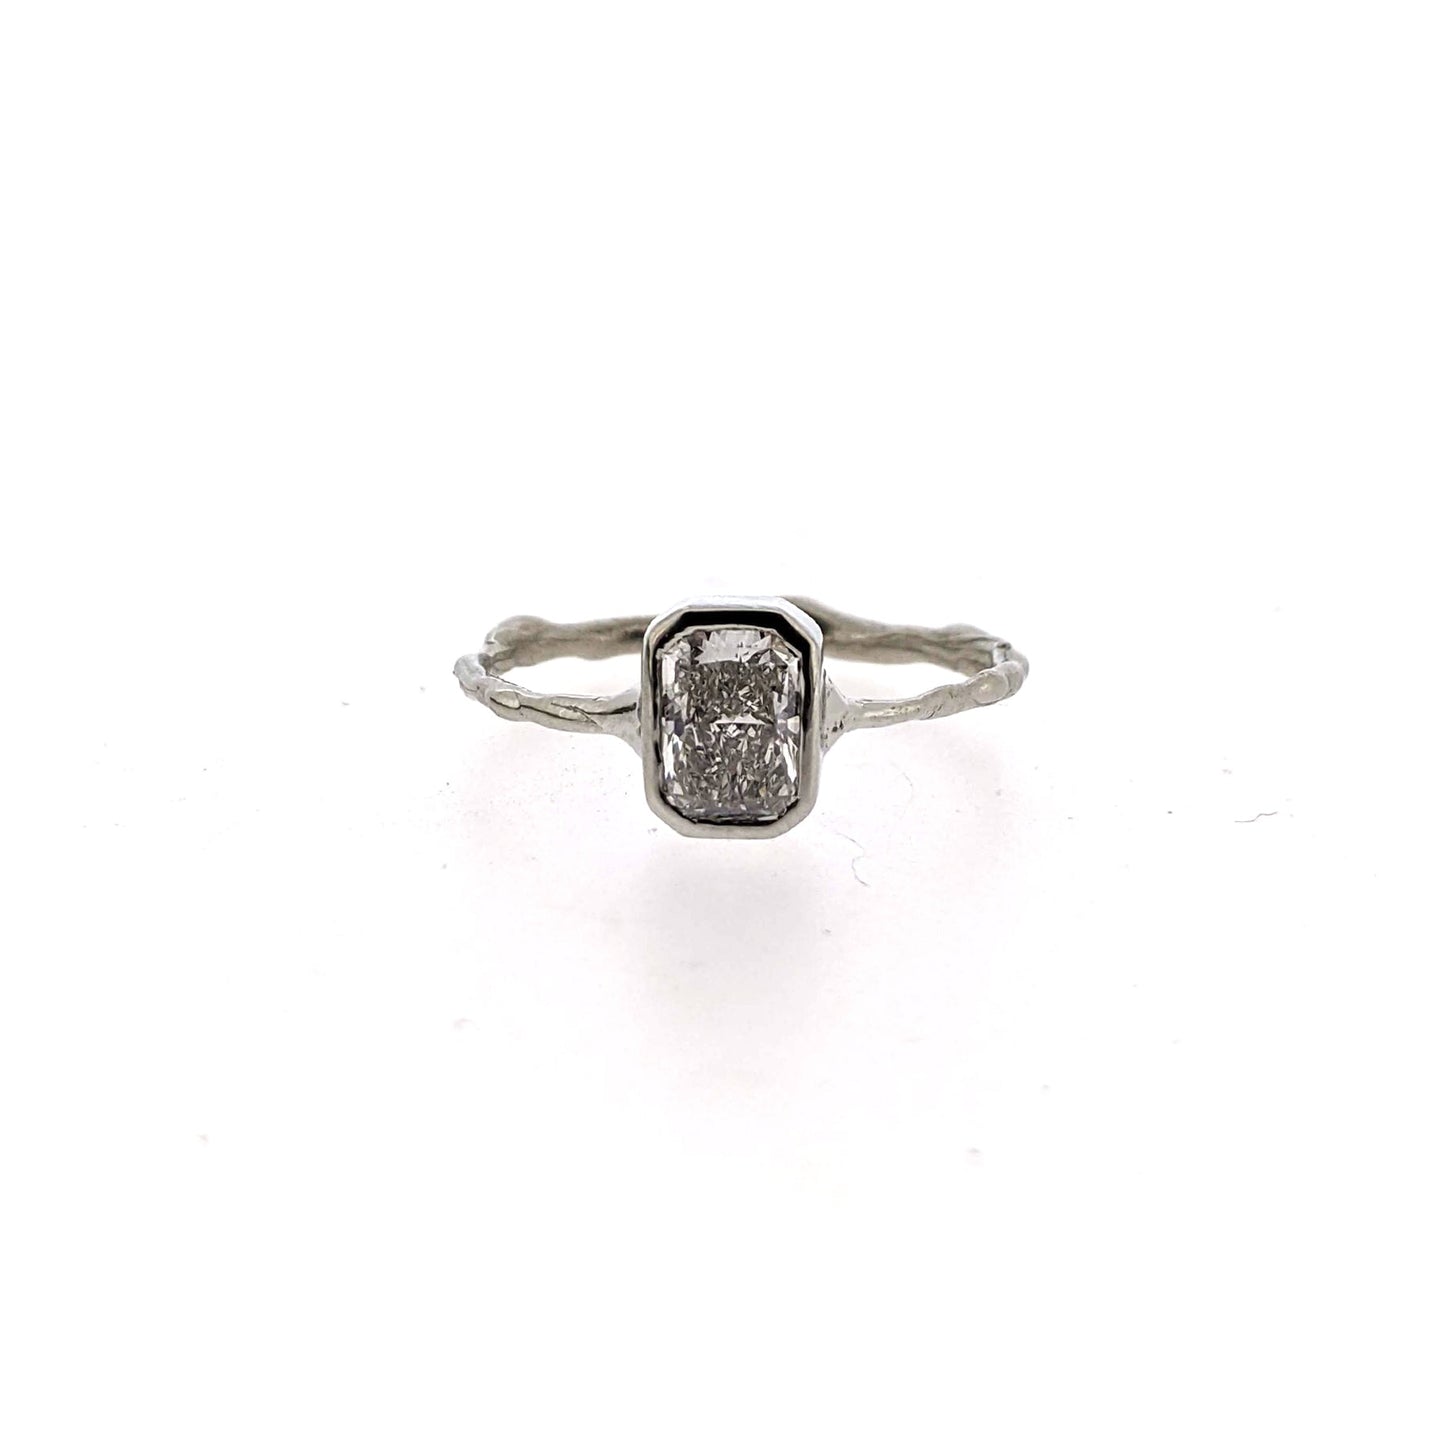 Frontal view of AnnaBeth Diamond Ring.